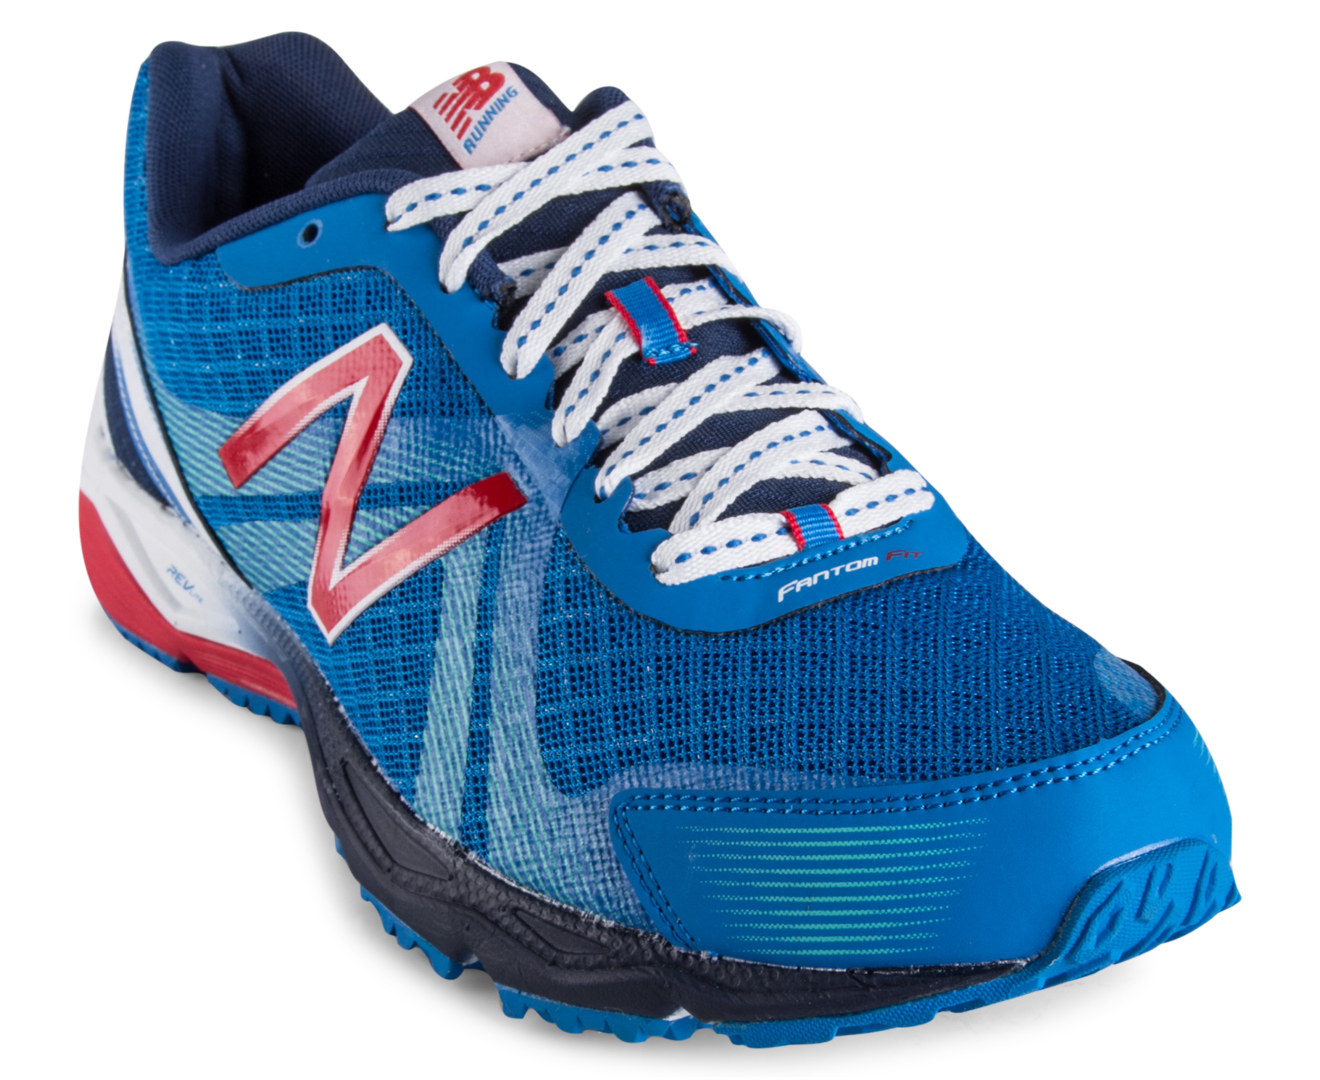 New Balance 790 Men's Running Shoe - Blue/Red | Catch.com.au